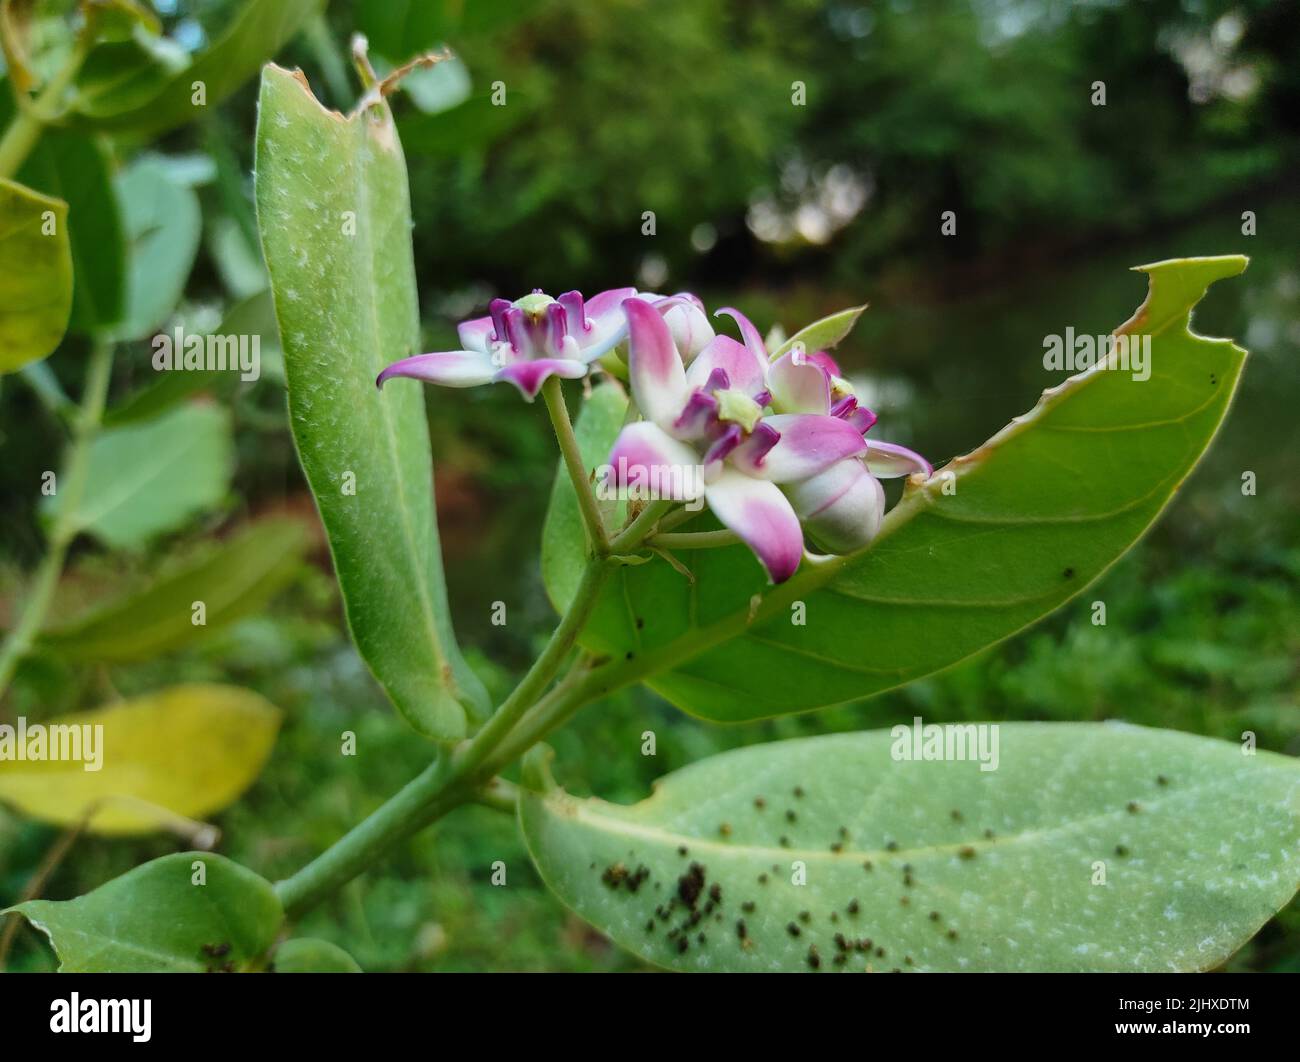 A Beautiful Shot Of Safed Aak Flowers Ayurvedic Medicinal Plants Stock Photo